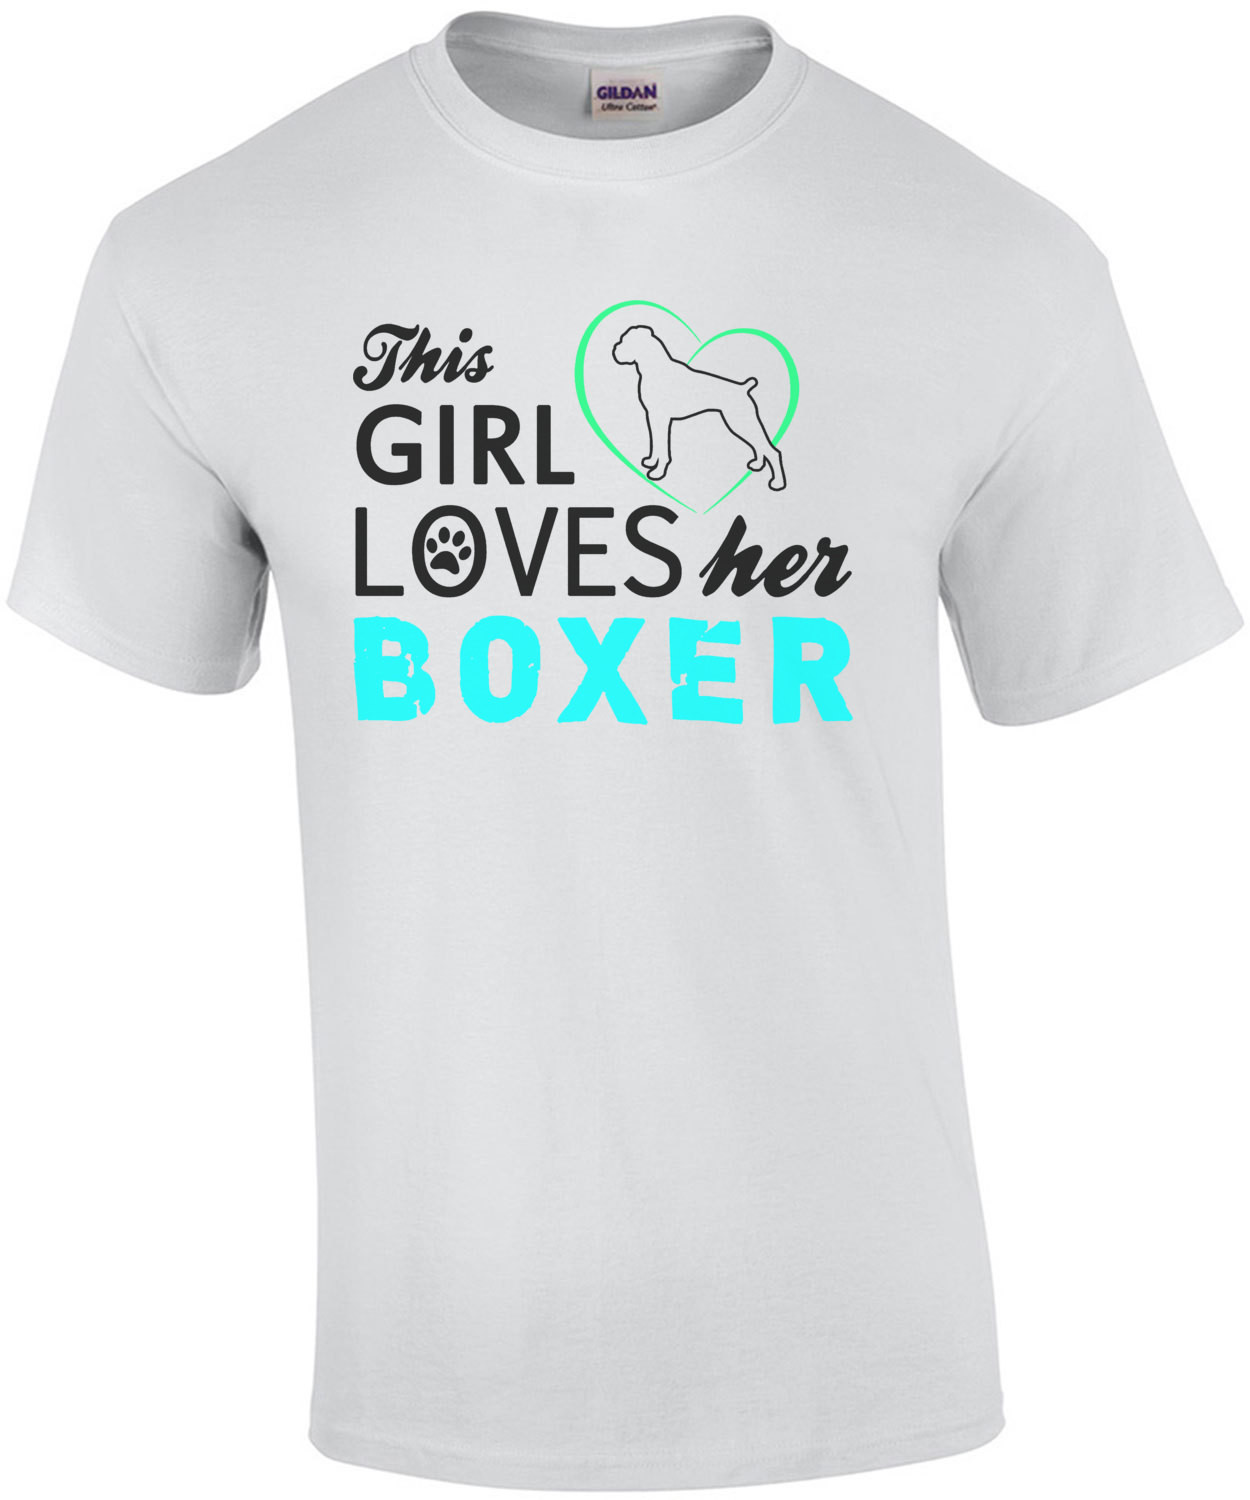 This Girl Loves Her Boxer T-Shirt